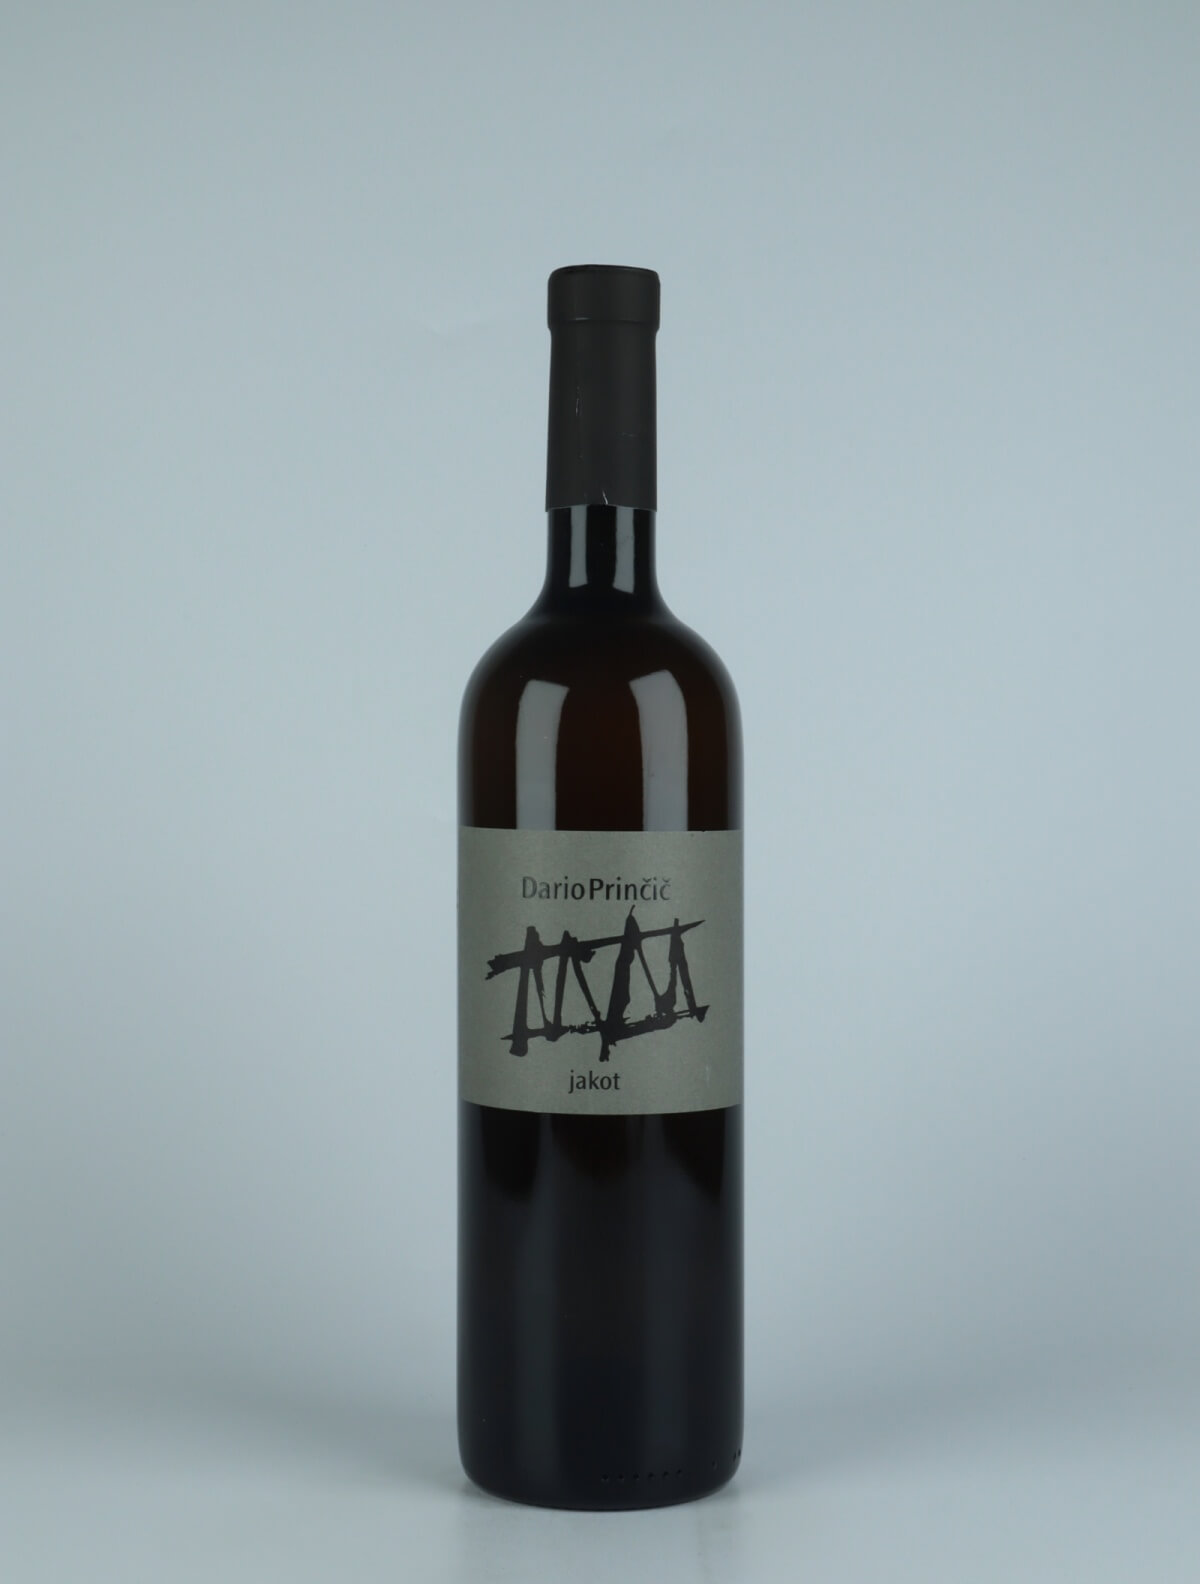 En flaske 2019 Jakot Orange vin fra Dario Princic, Friuli i Italien